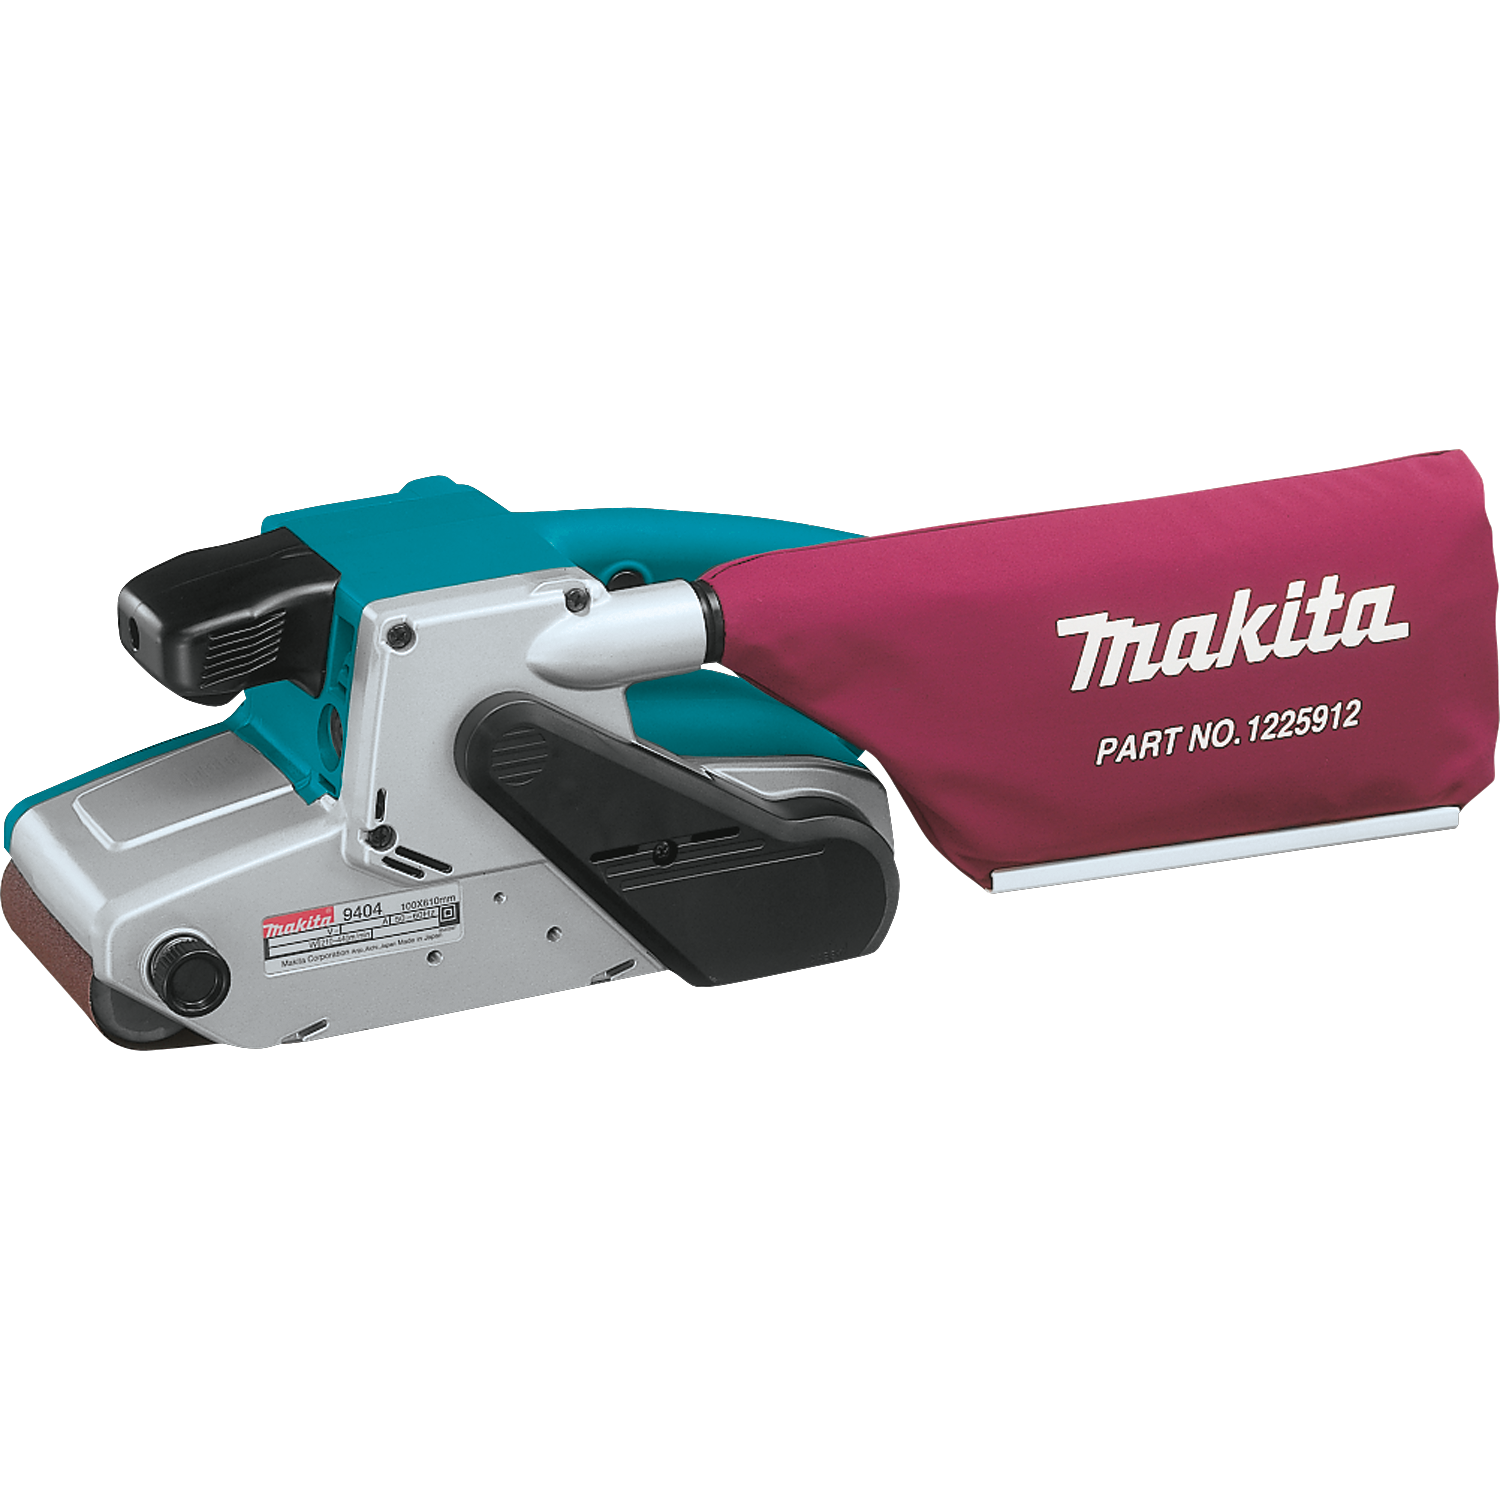 Makita 9404 4" x 24" Belt Sander, with Variable Speed